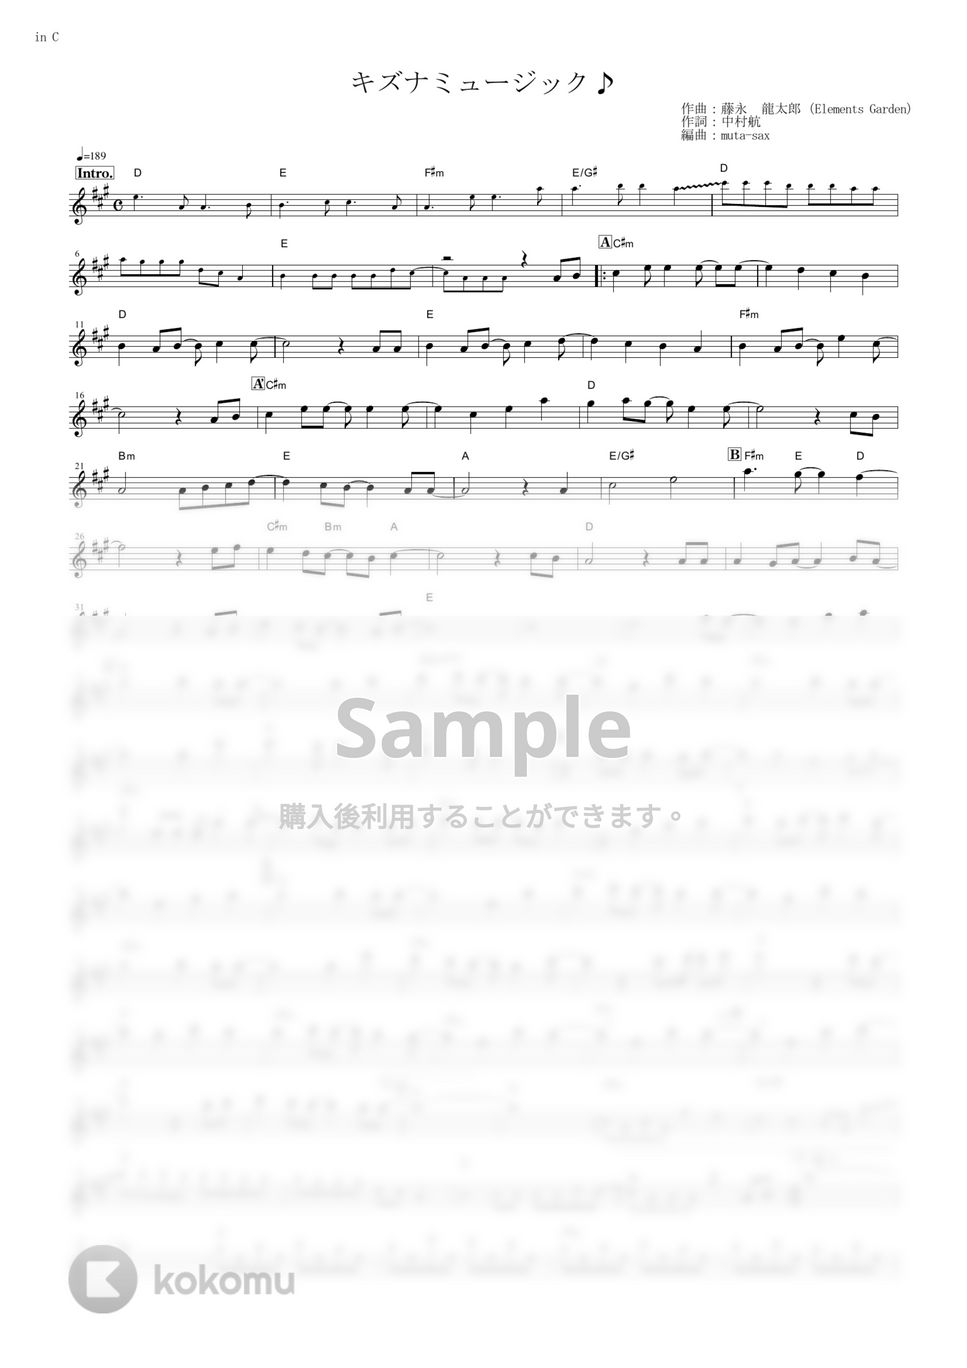 BanG Dream!（バンドリ！）第2期 - キズナミュージック♪【in C】 by muta-sax